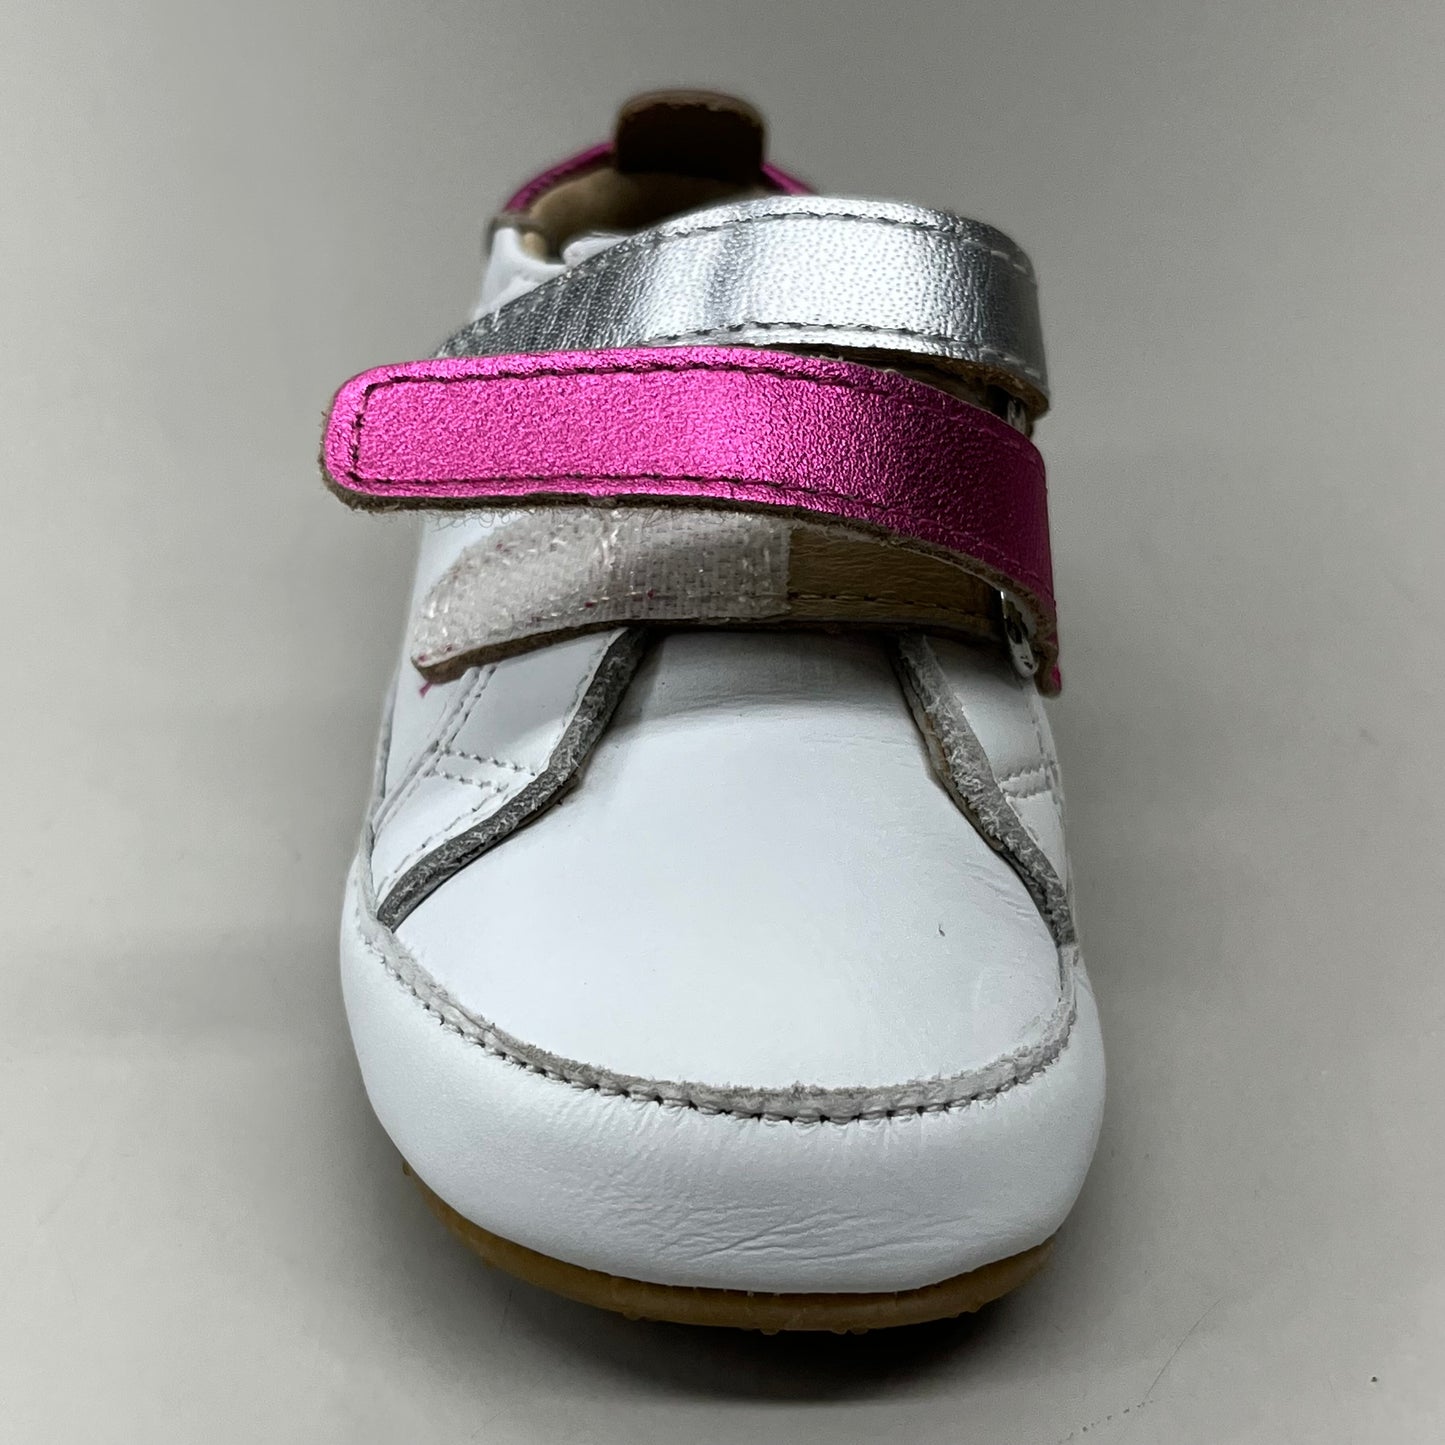 OLD SOLES Baby 2 Straps Leather Shoe Sz 4 EU 20 Snow/Fuchsia Foil/Silver #0060R